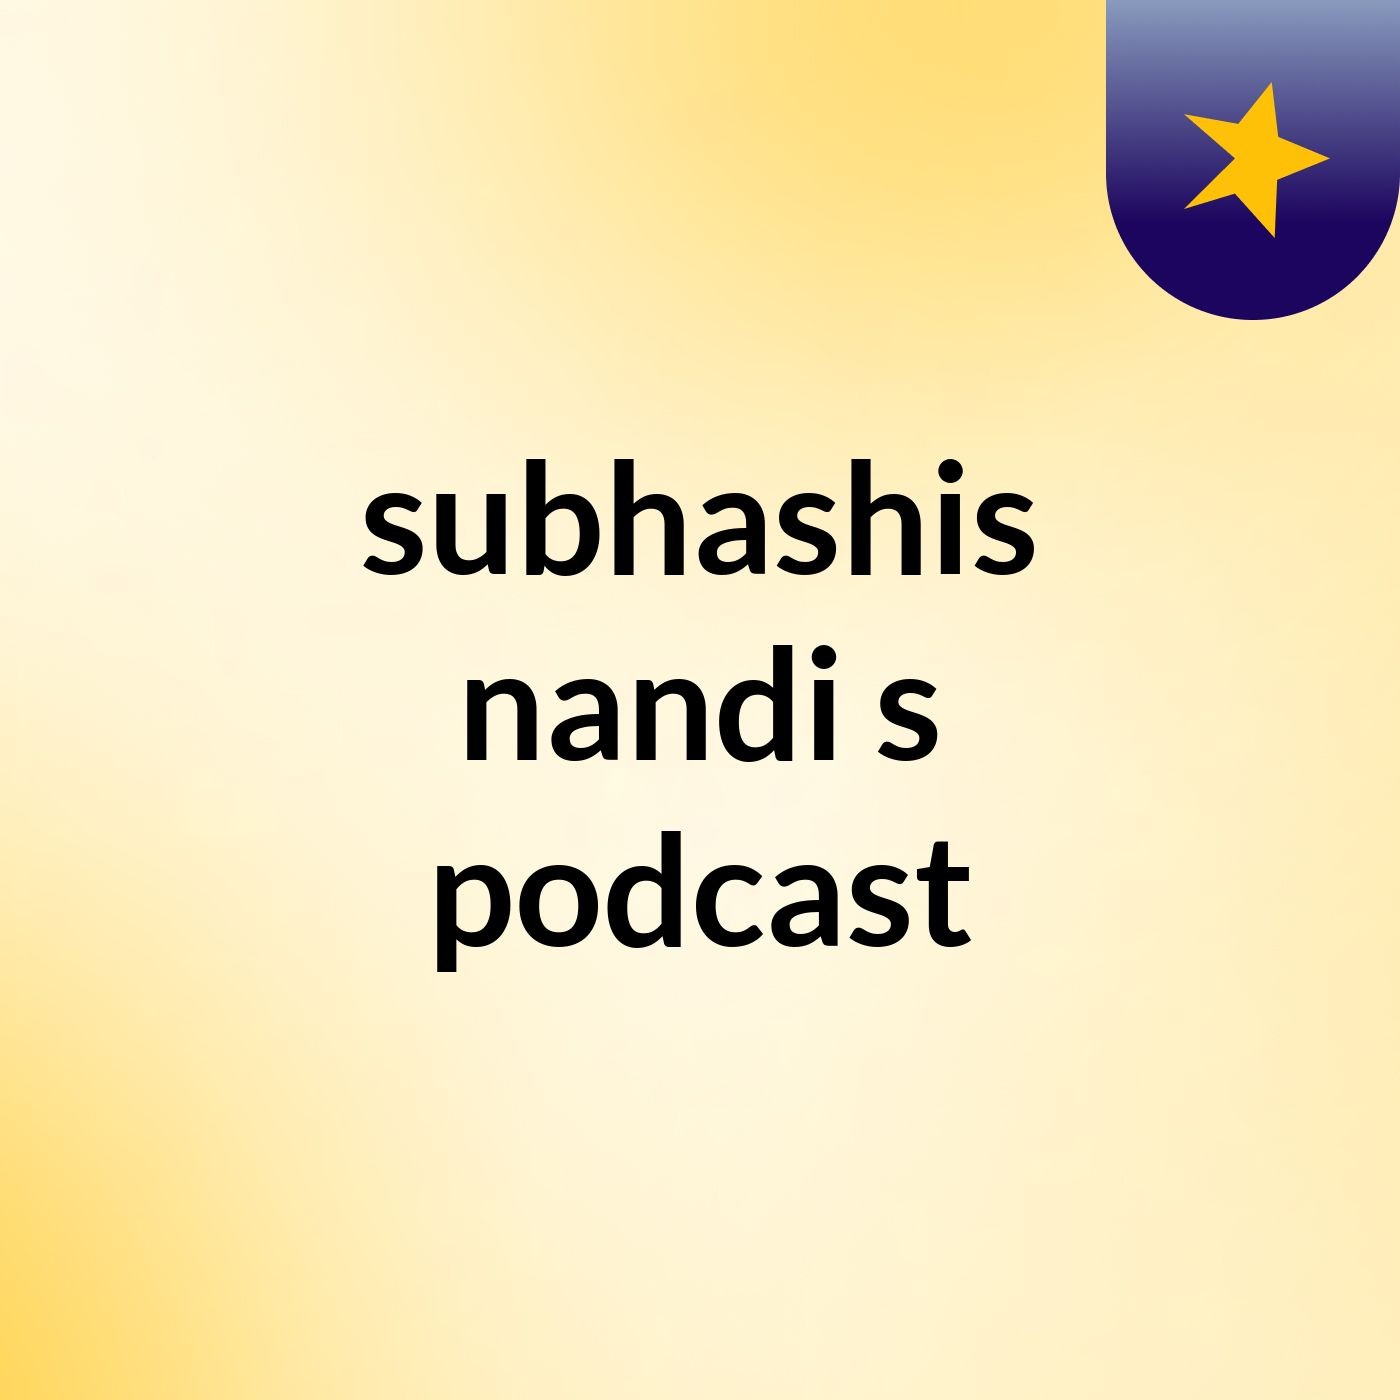 subhashis nandi's podcast